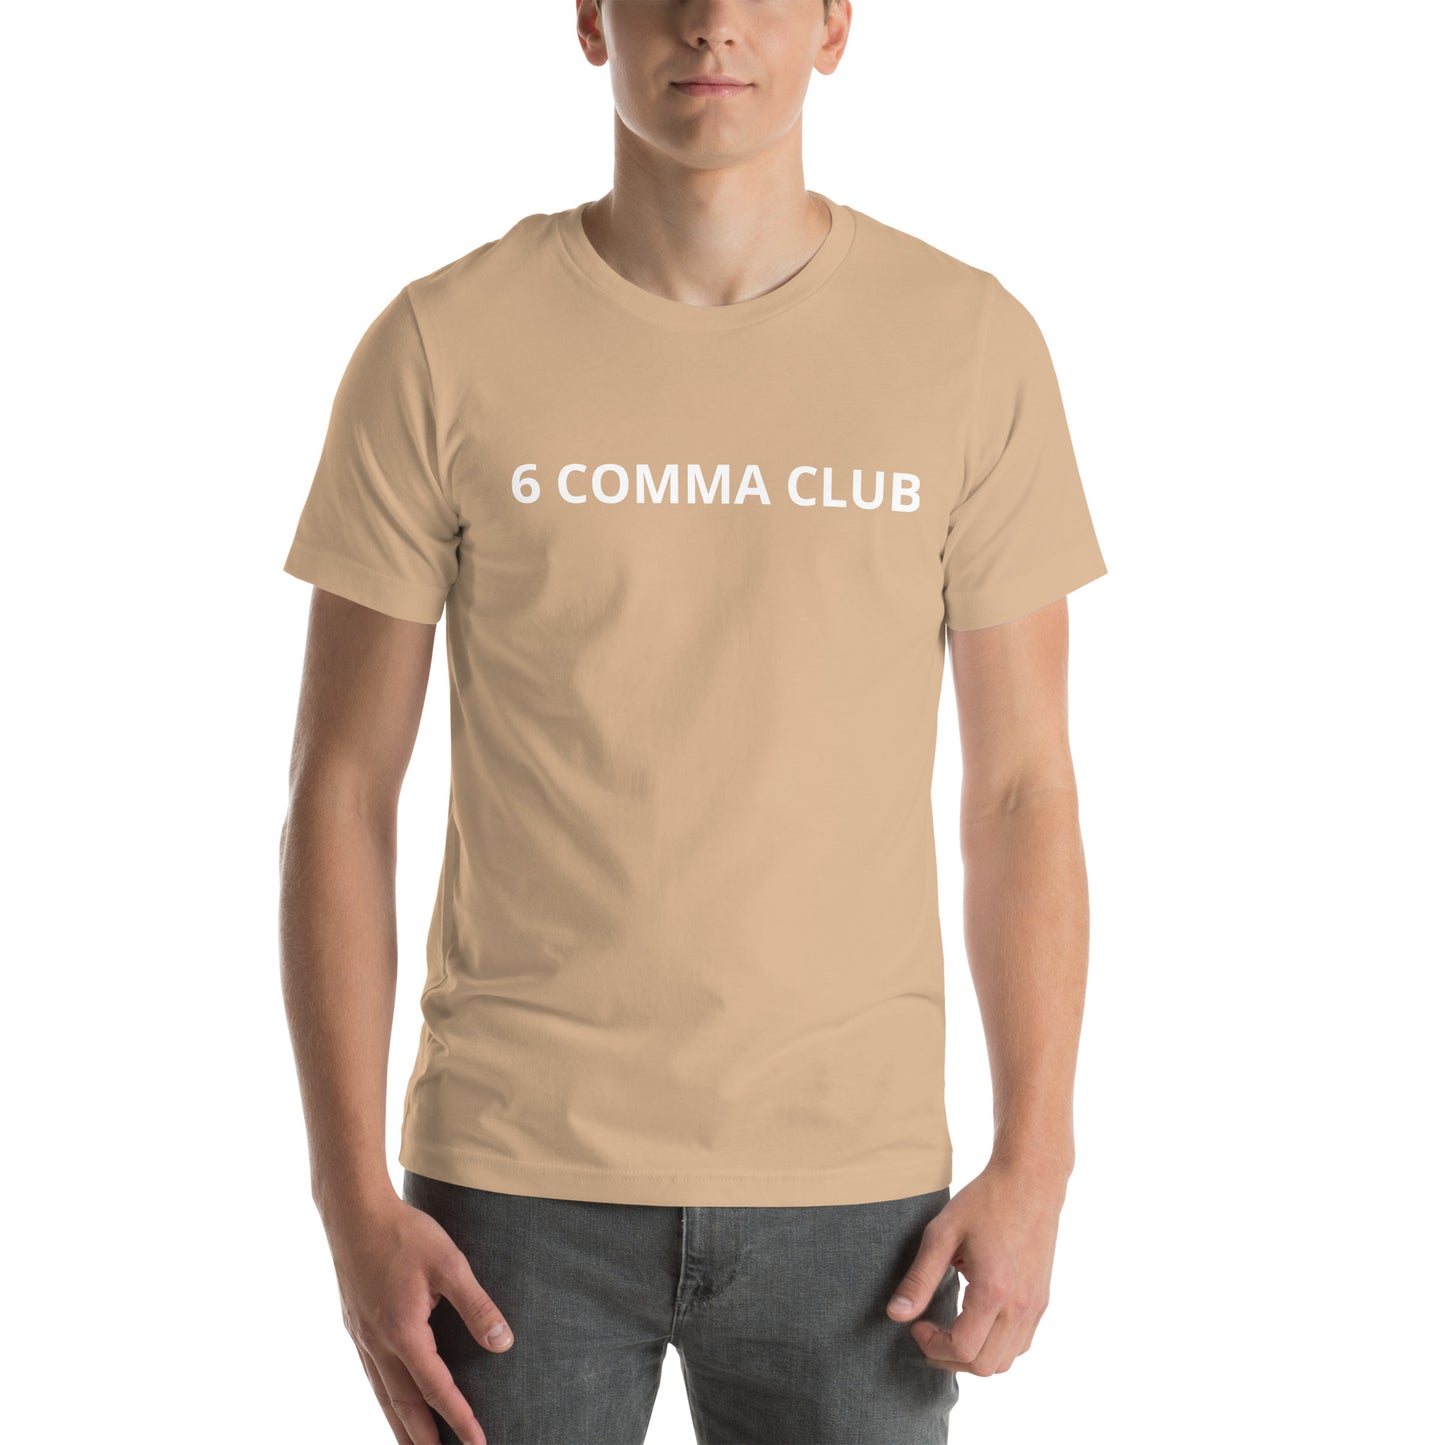 6 COMMA CLUB  Unisex t-shirt